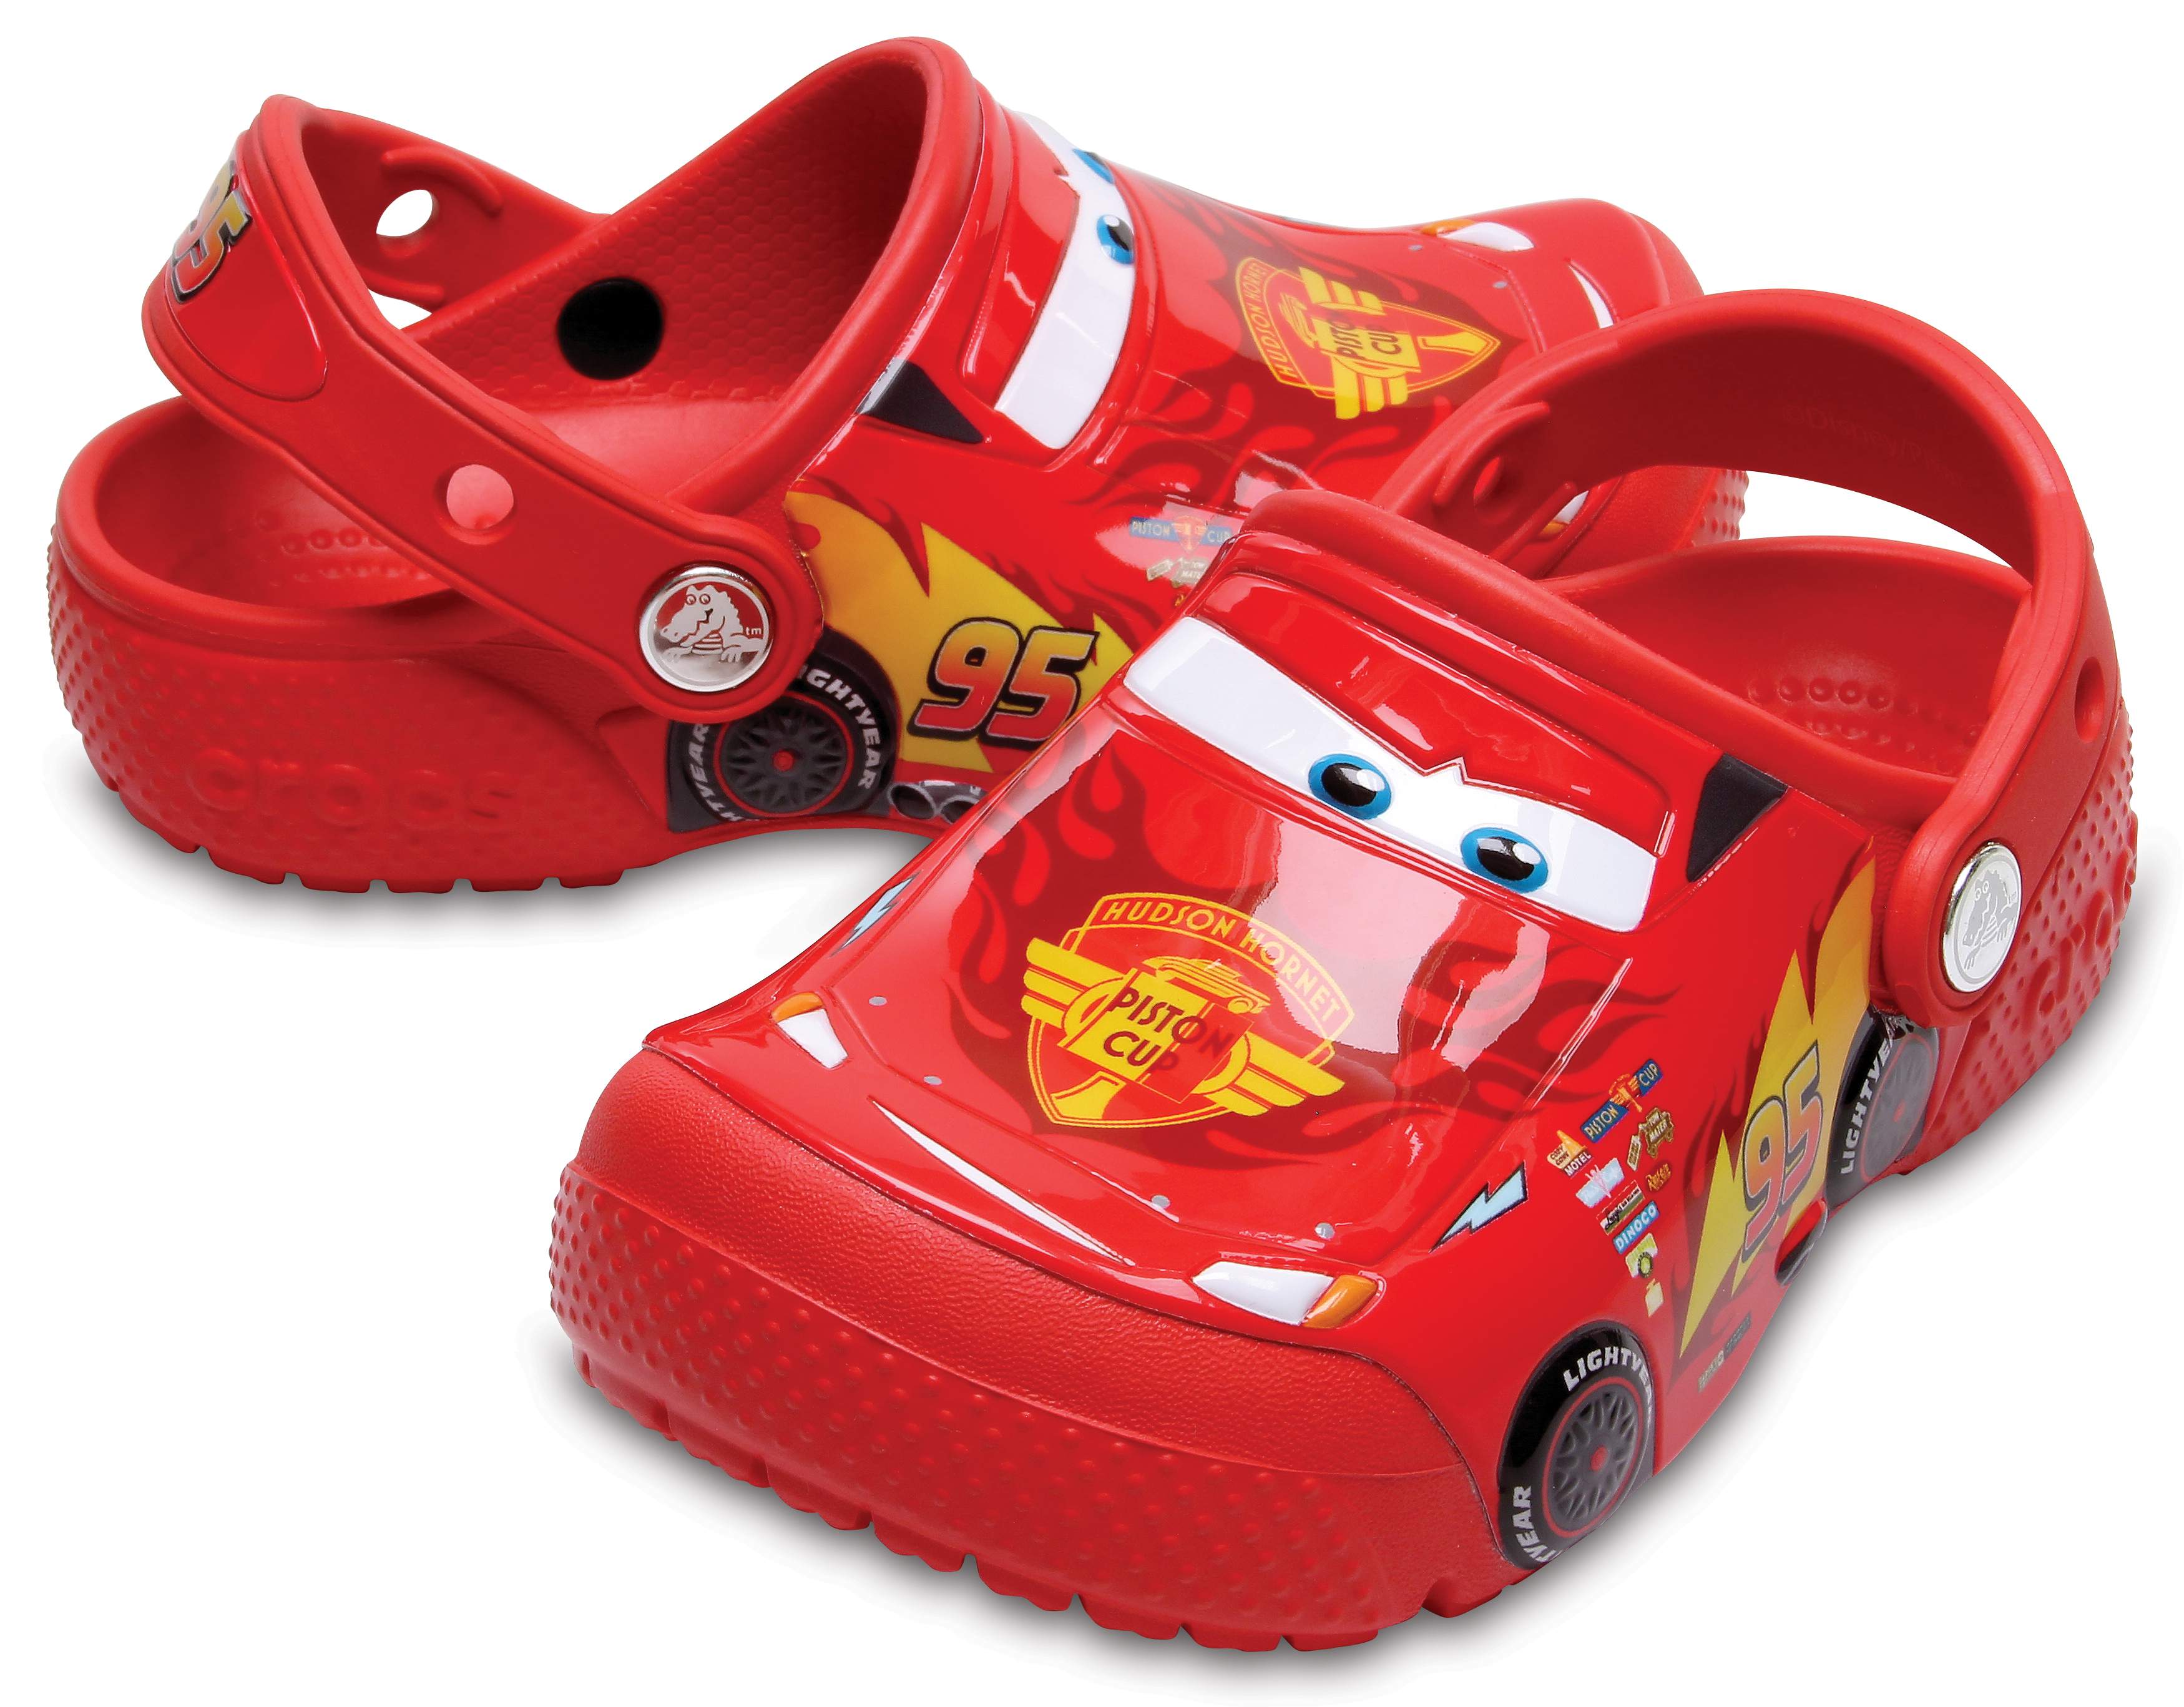 croc shoes for children